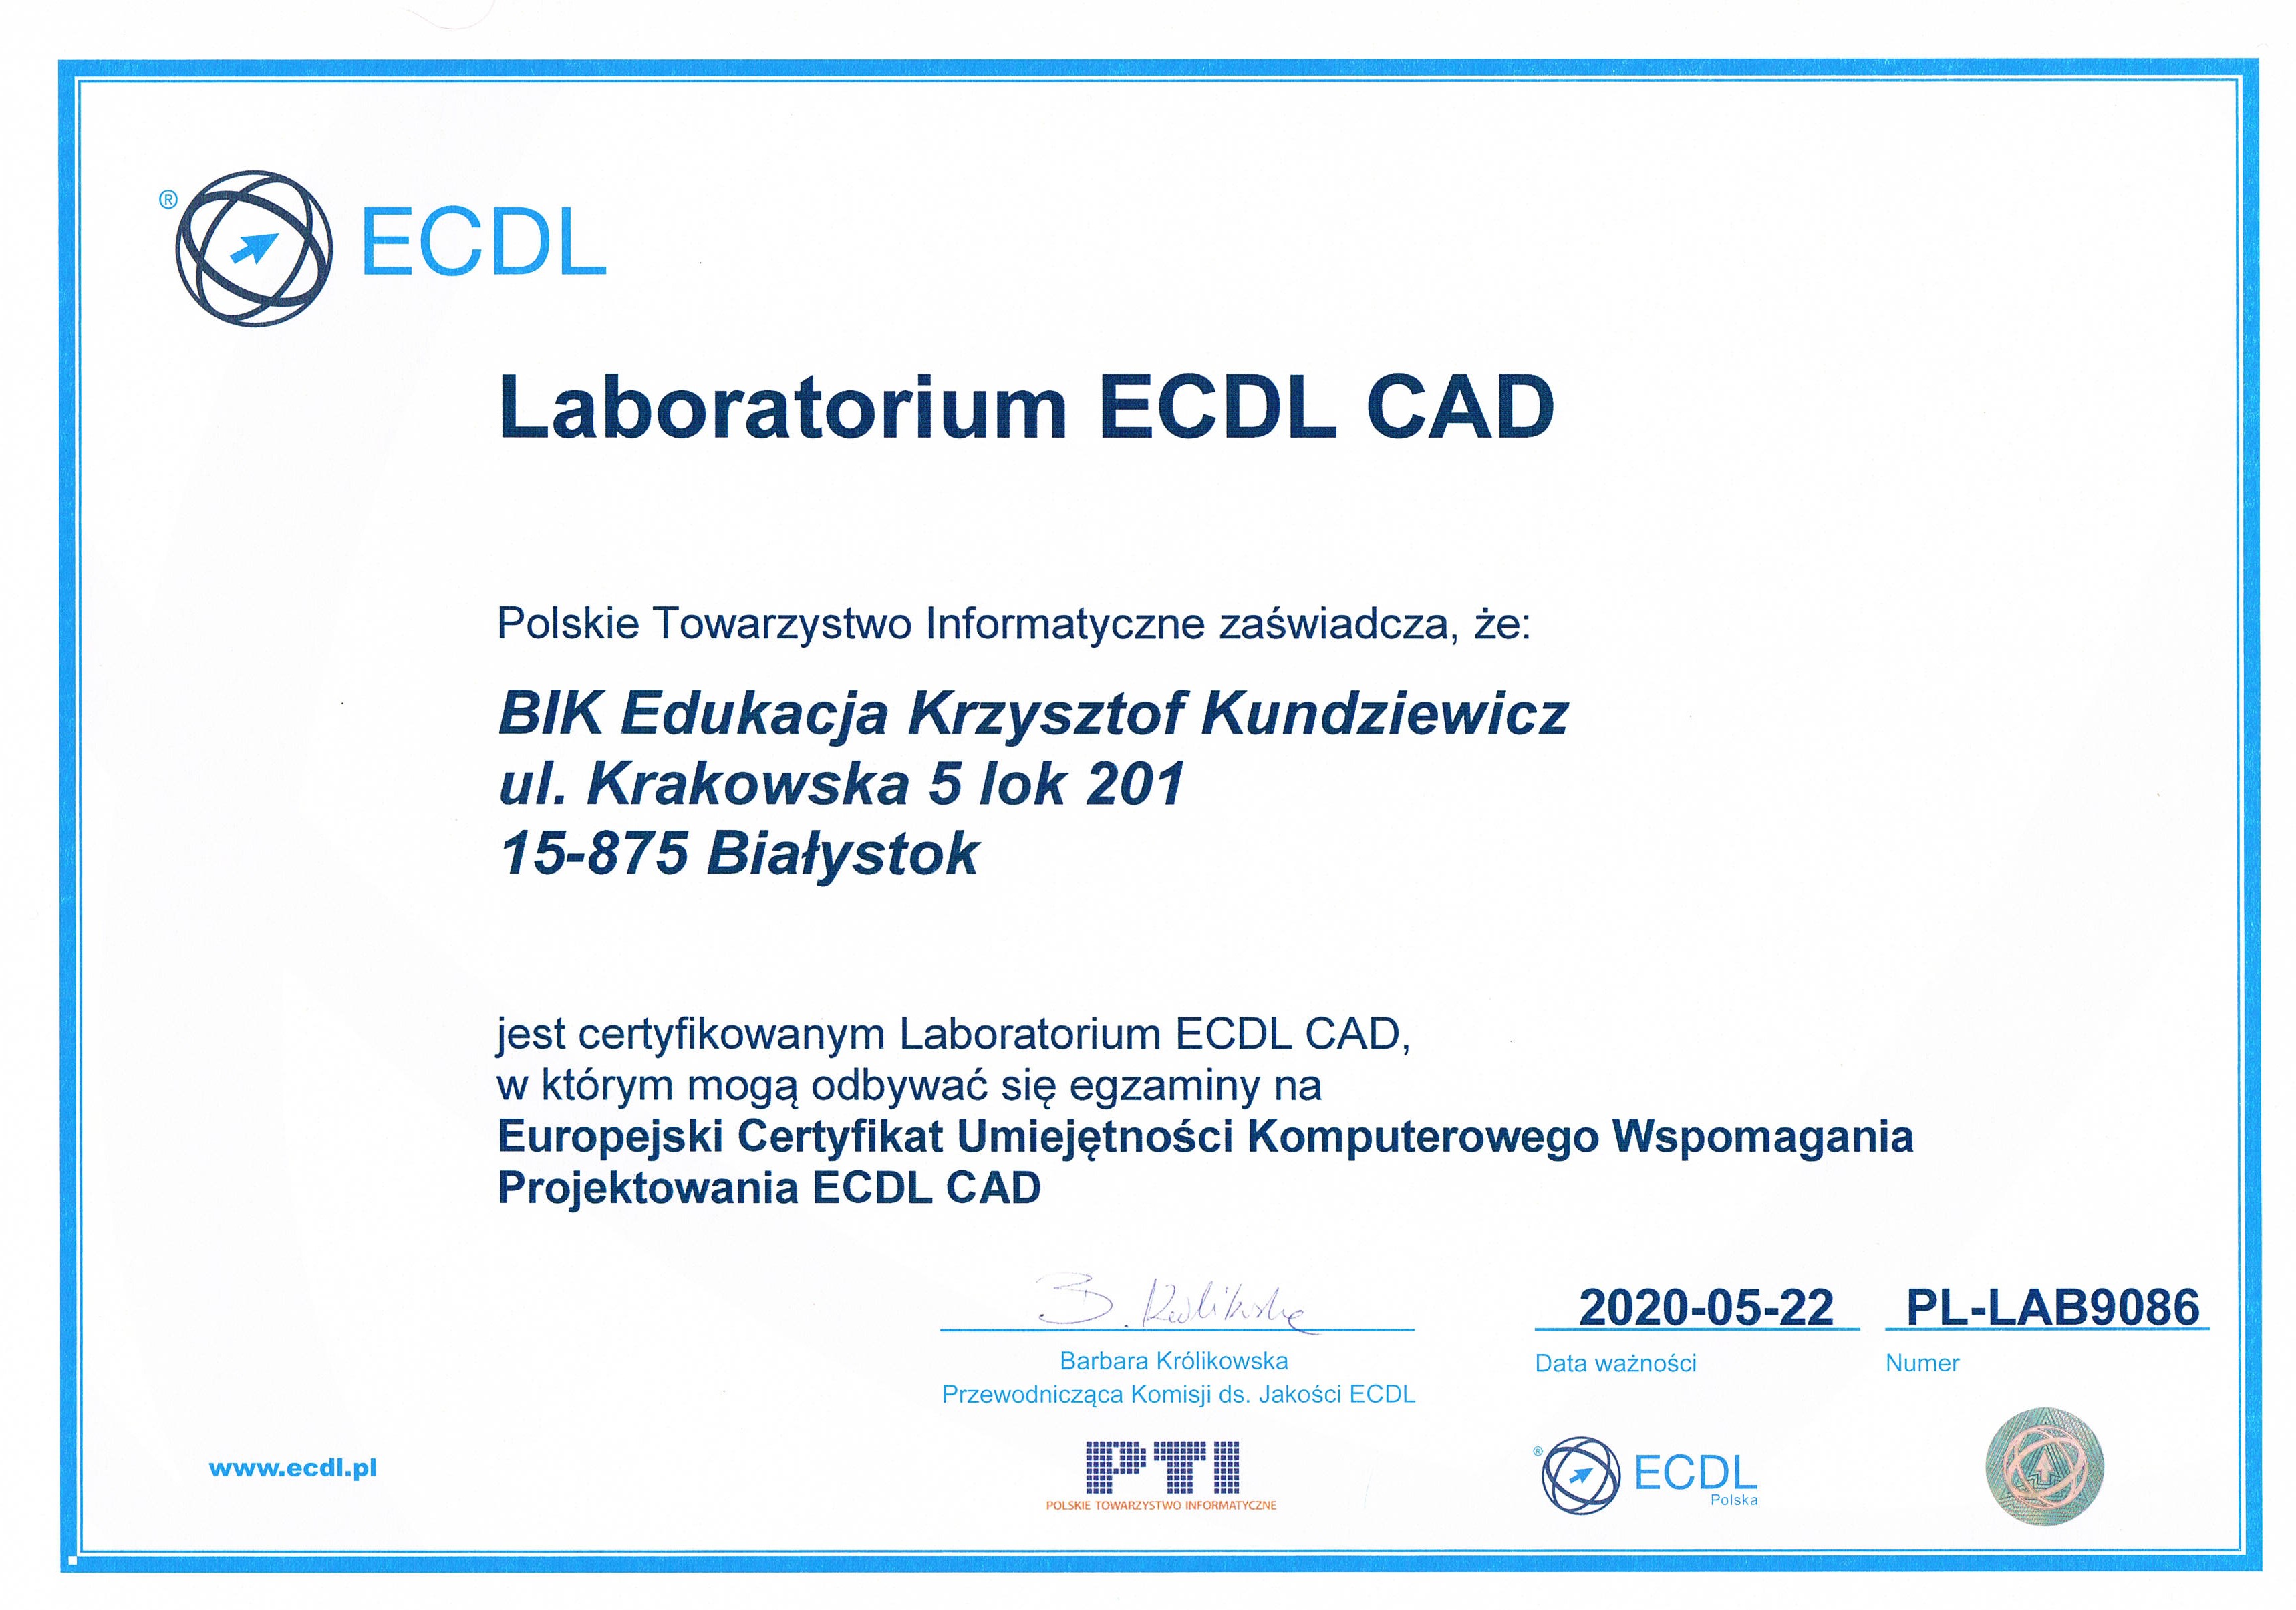 ECDL CAD lab 2020 05 22